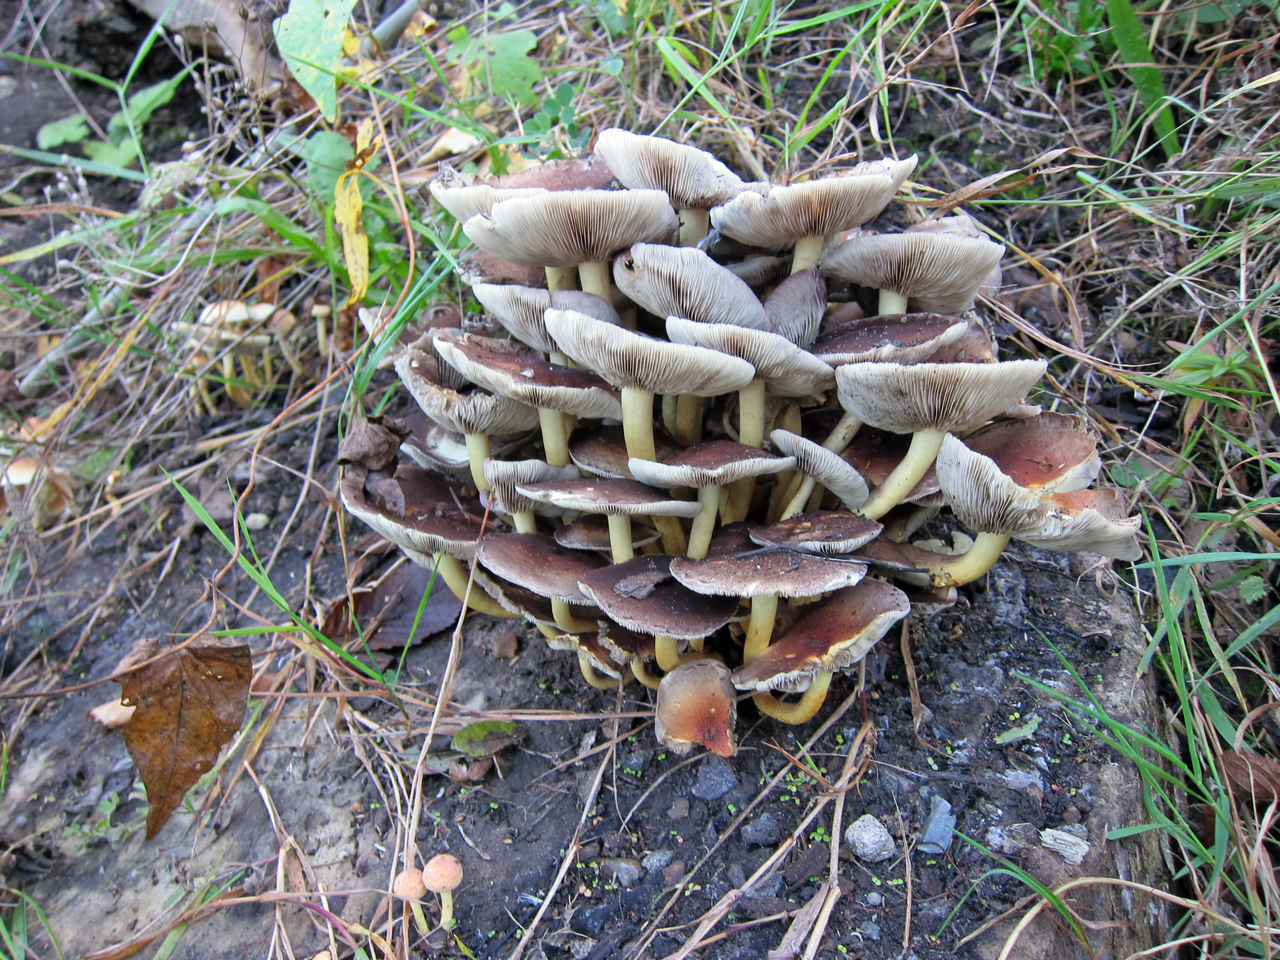 Autumn fungi at Woodlands Farm